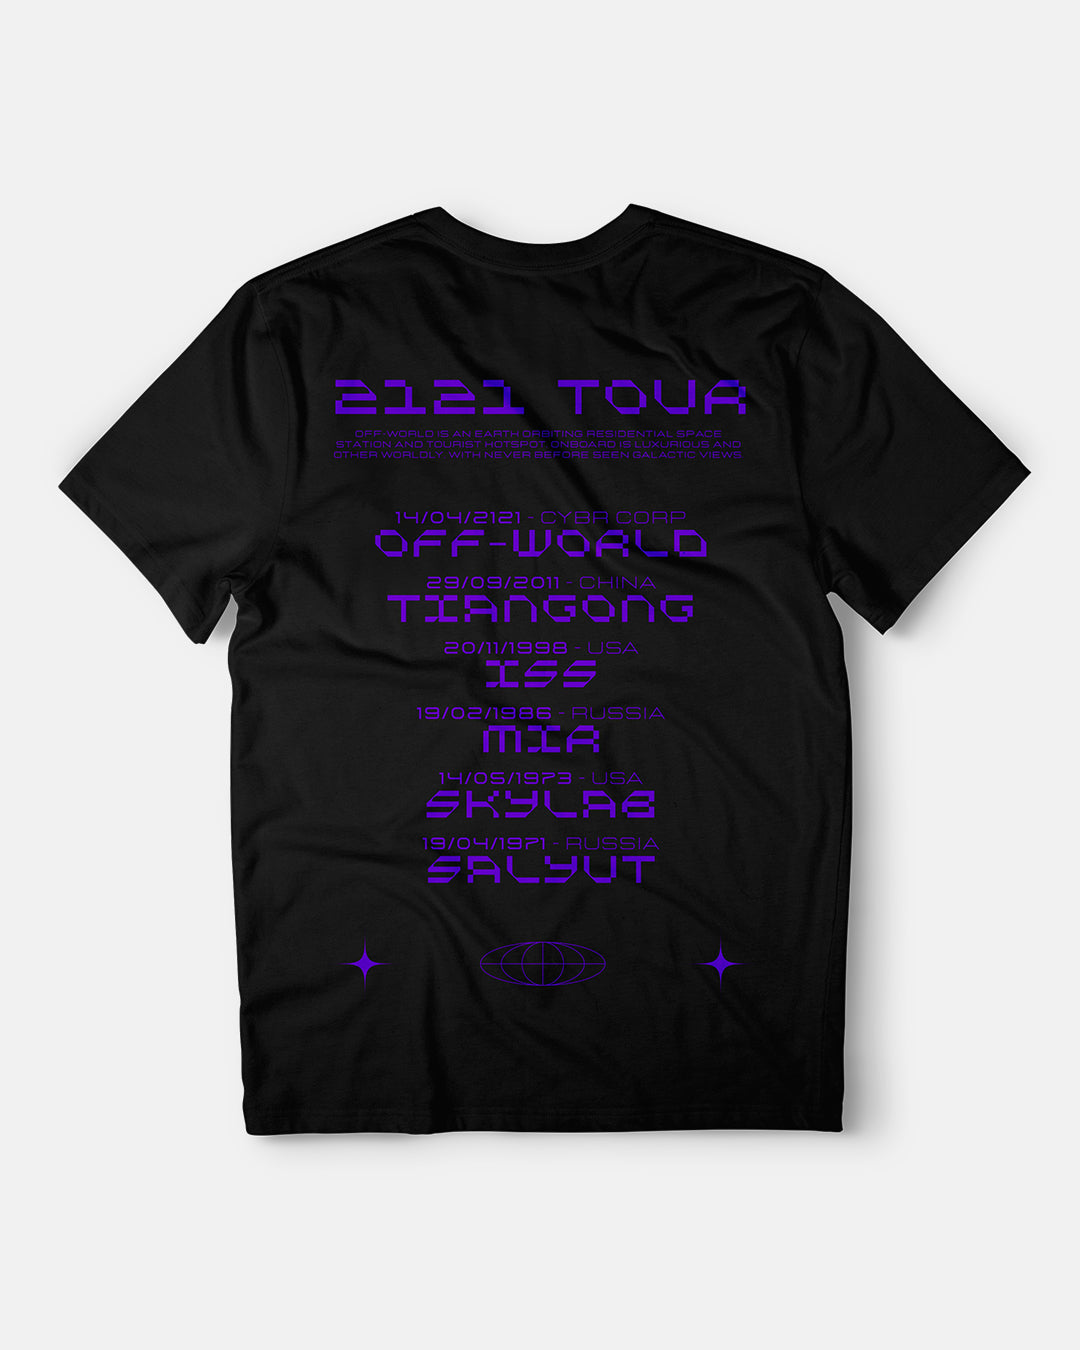 OFF-WORLD TOUR AR T-SHIRT BLACK